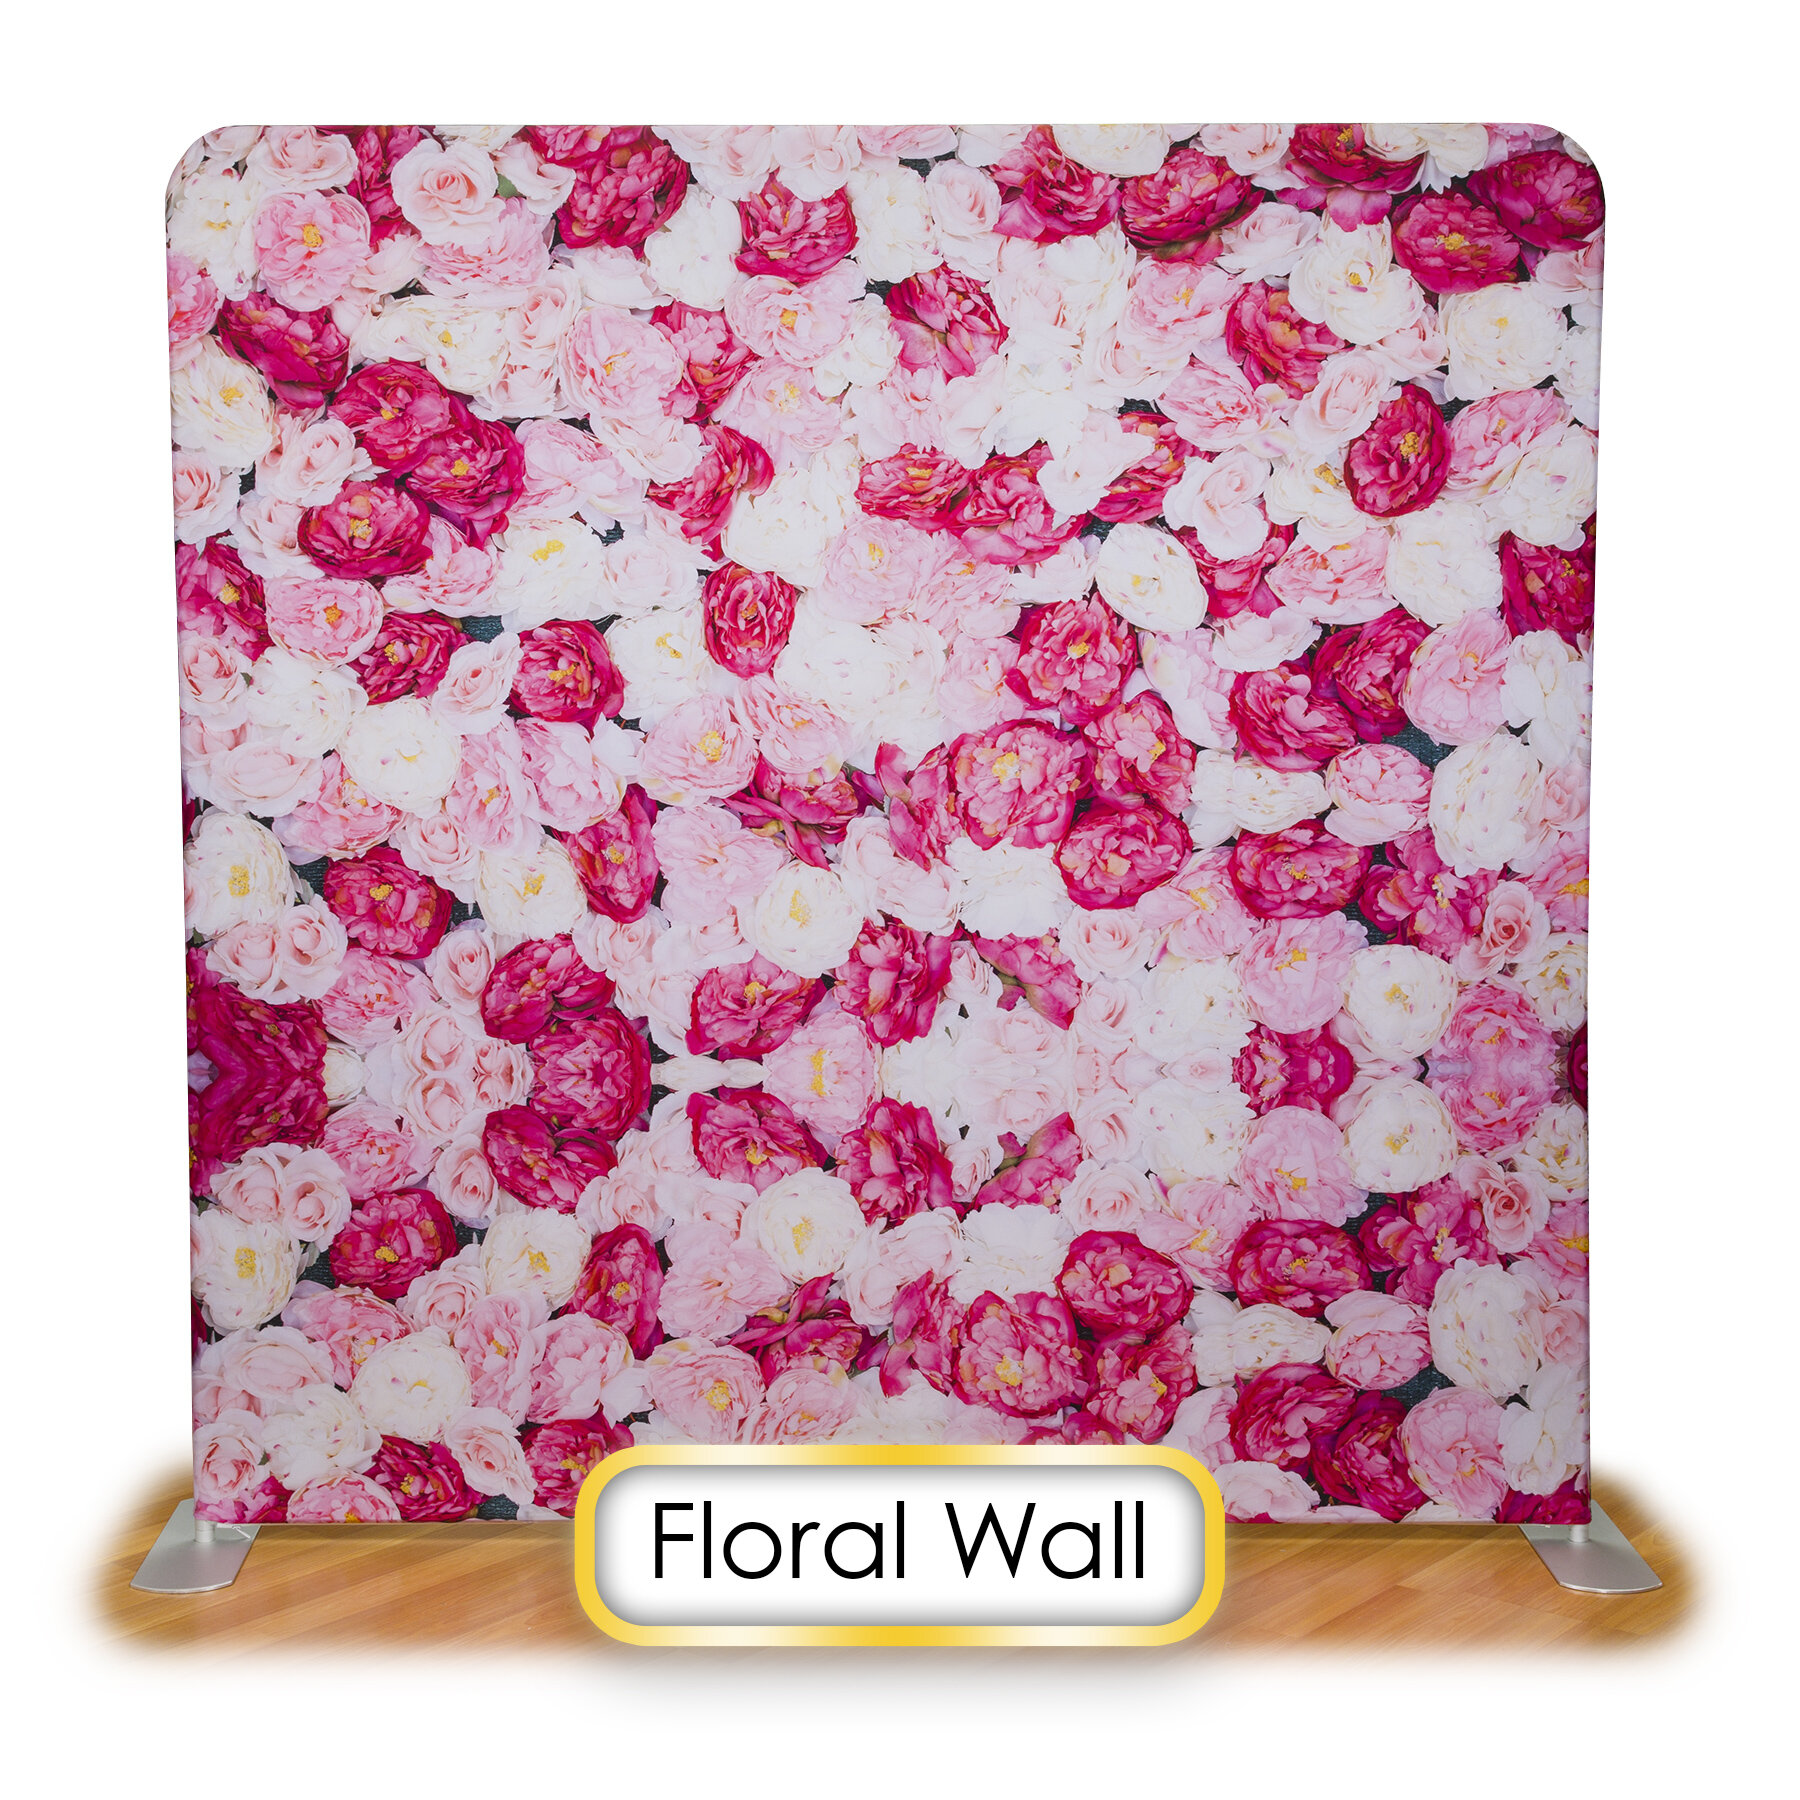 Floral Wall.jpg